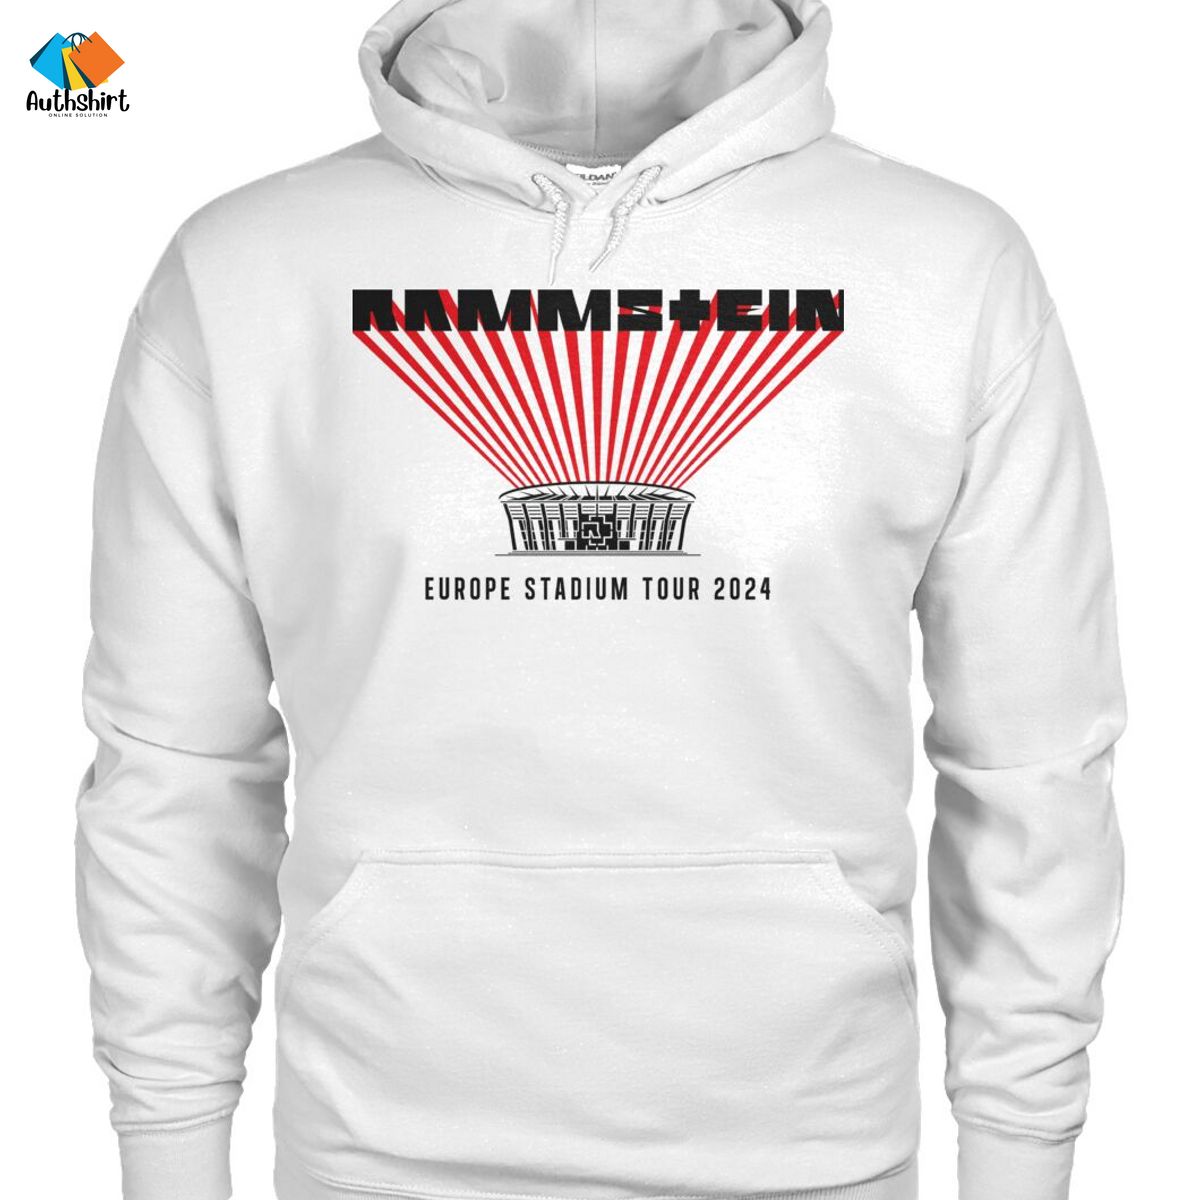 Europe Stadium Tour 2024 Rammstein Shirt